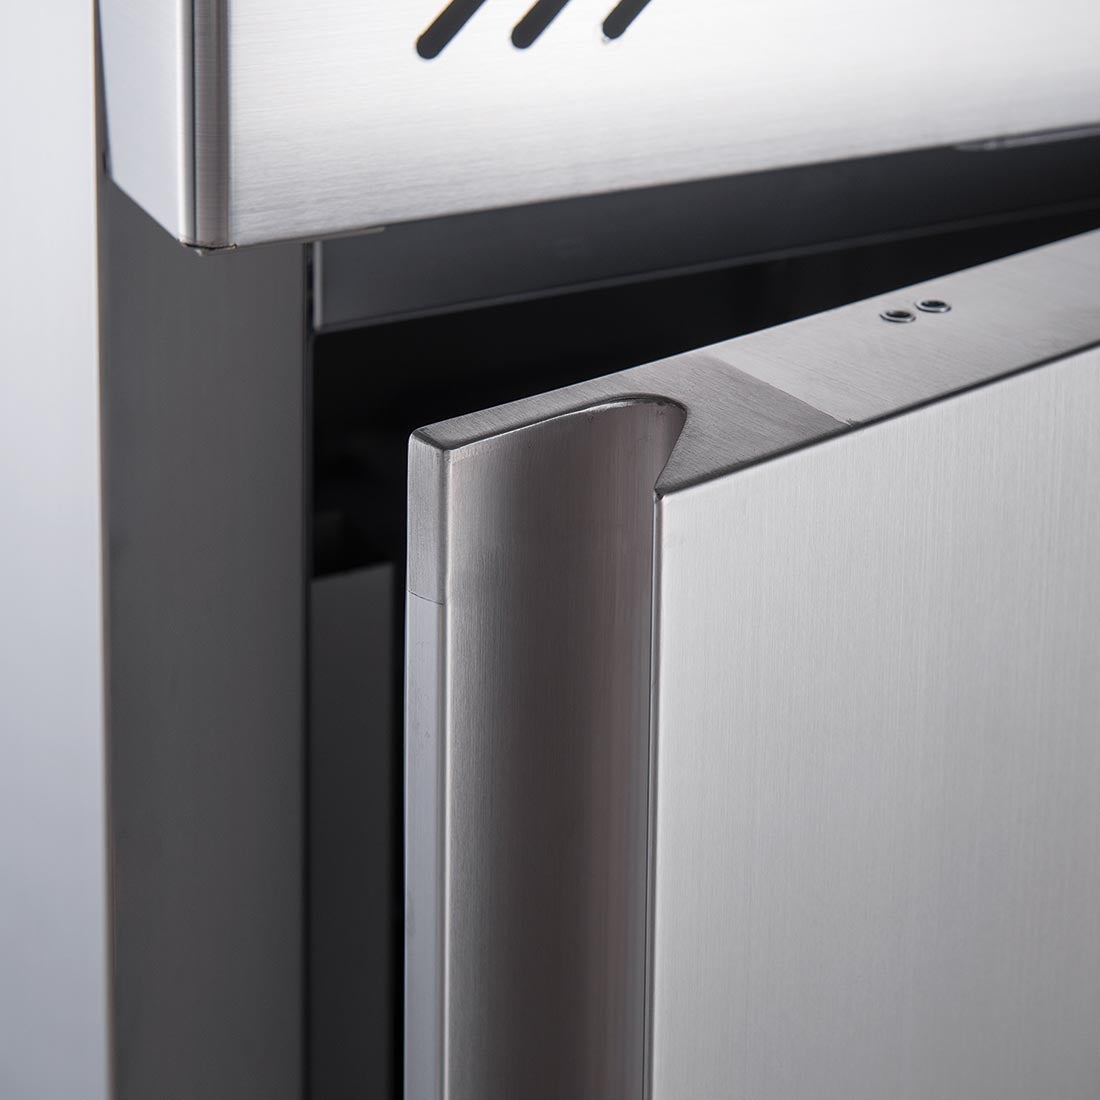 FED-X S/S Single Door Upright Freezer – XURF400SFV 